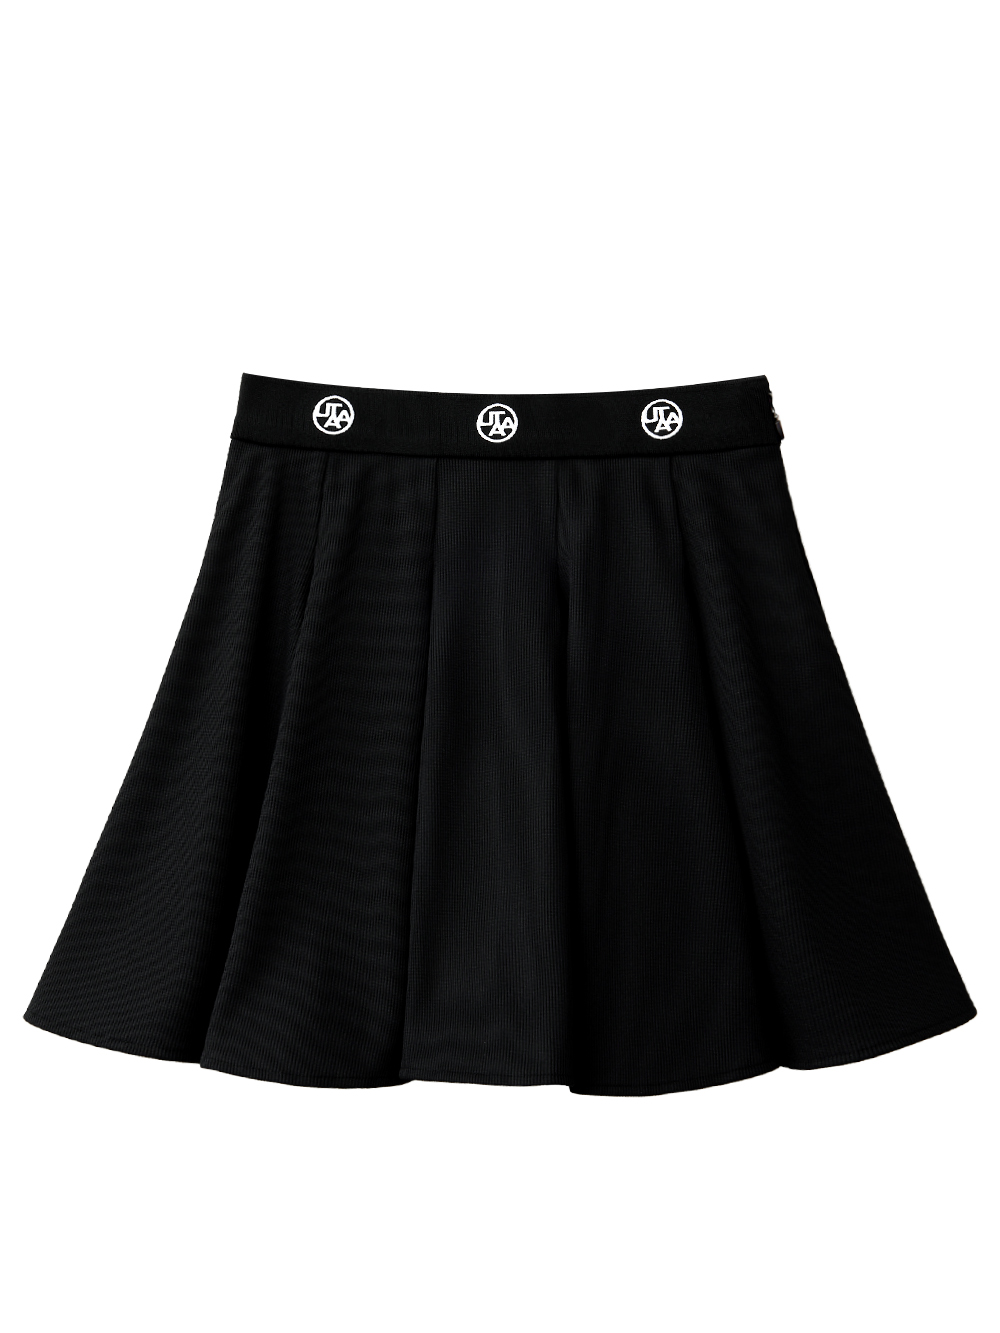 UTAA Triple Tiny Logo Flare Skirt : Black (UD2SKF296BK)